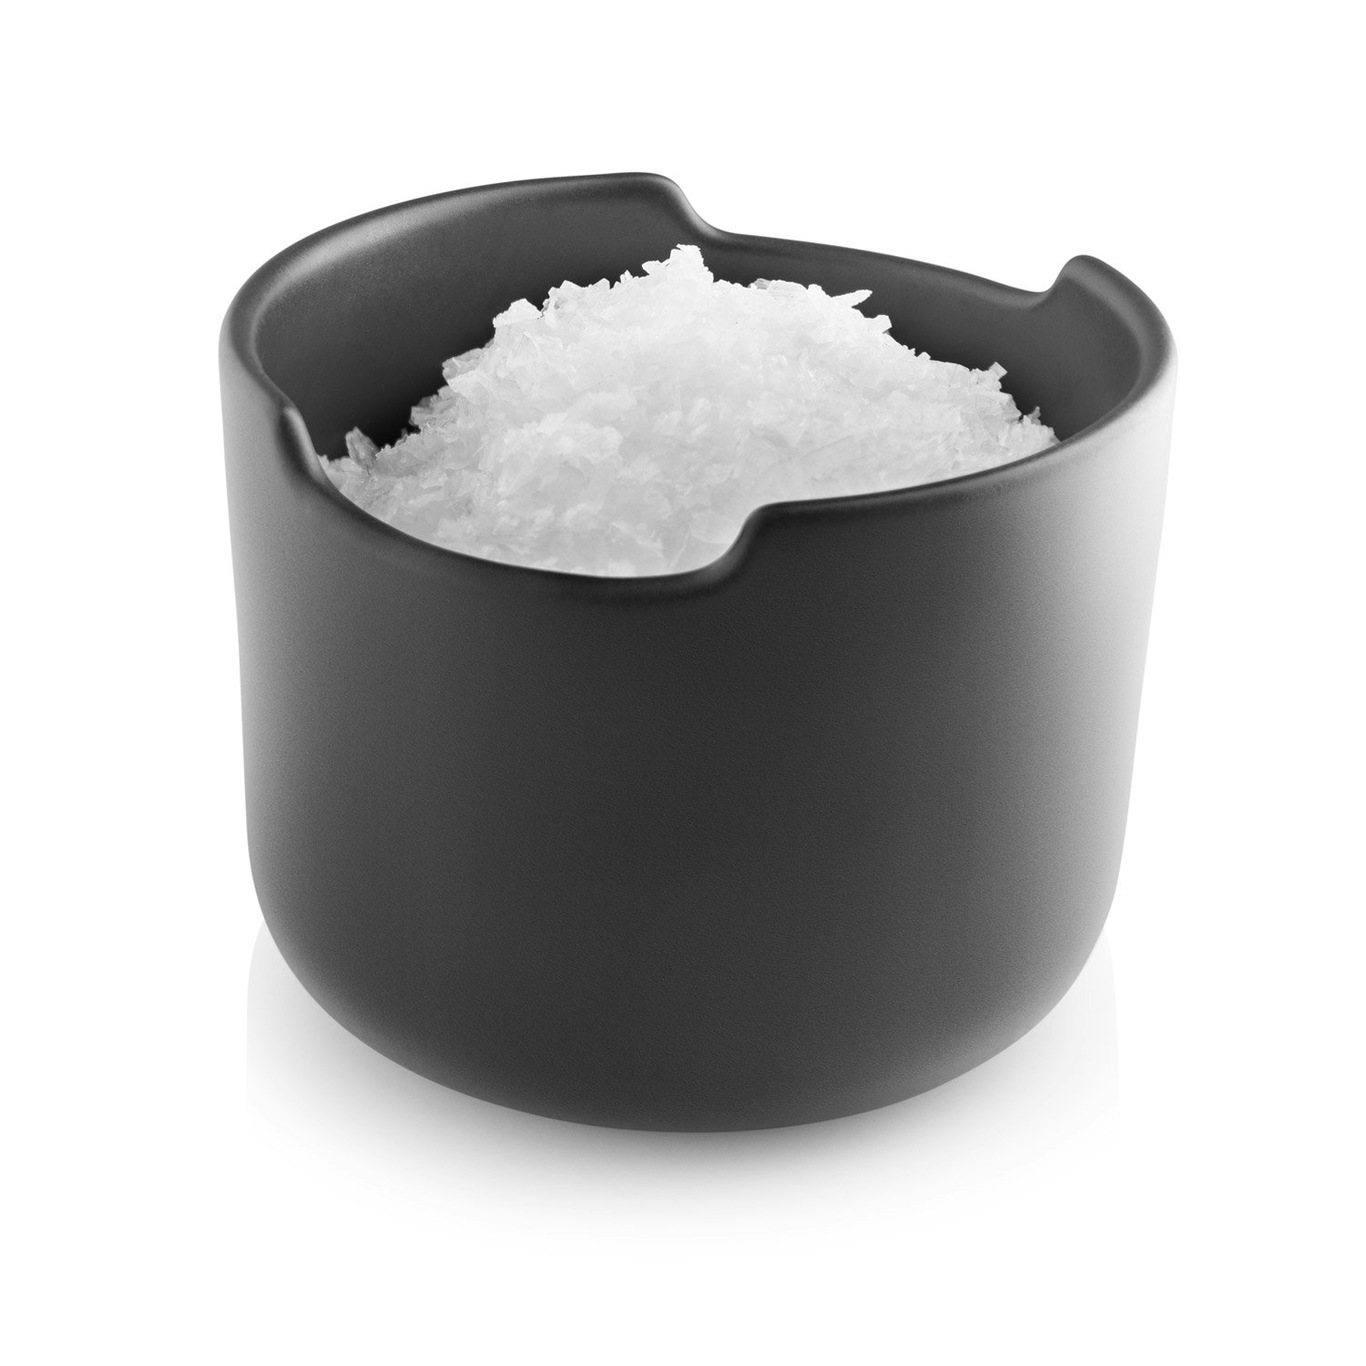 https://royaldesign.com/image/2/eva-solo-nordic-kitchen-salt-bowl-40-cl-1?w=800&quality=80